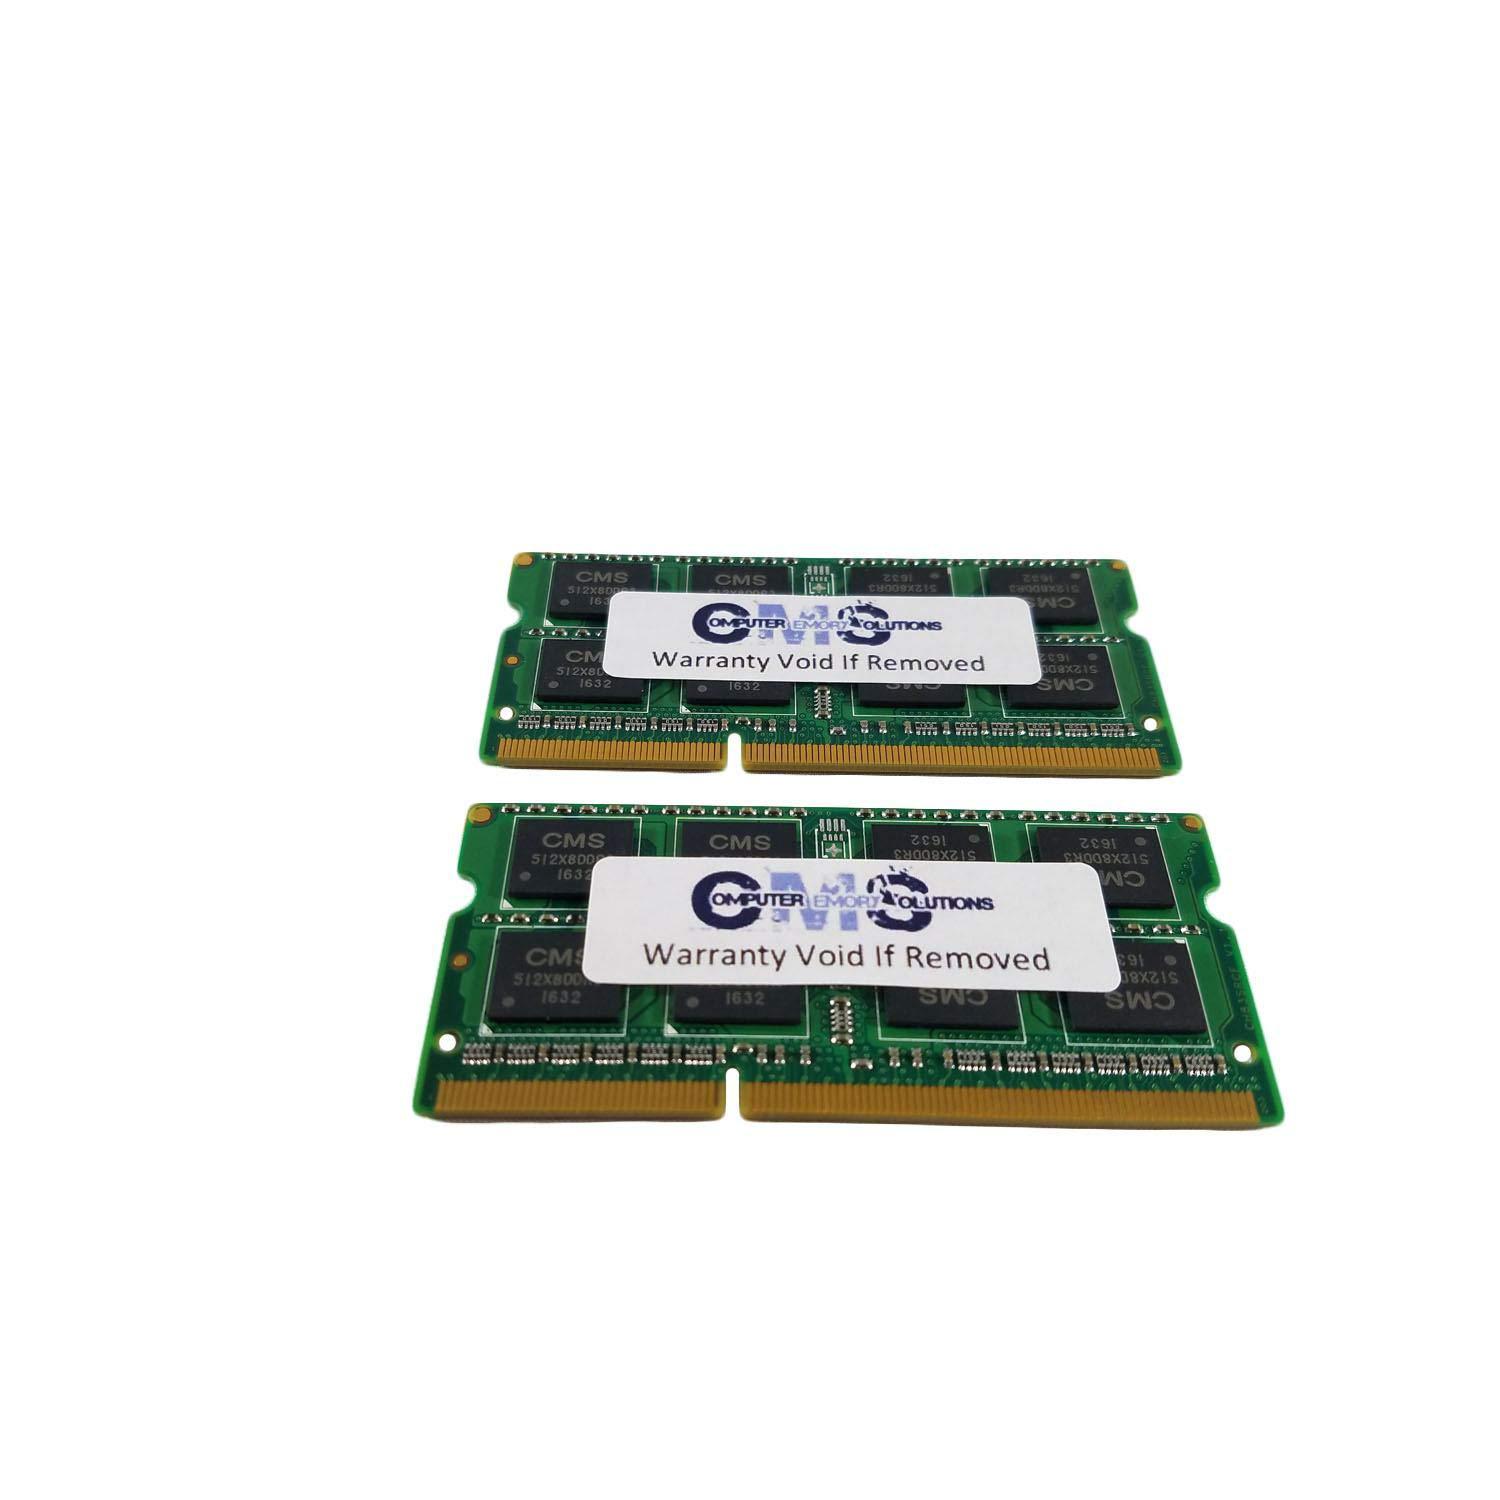 Computer Memory Solutions cms 8gb (2x4gb) ddr3 8500 1066mhz non ecc sodimm memory ram upgrade compatible with lenovo thinkpad x201 3249-xxx; 3626-xxx; 